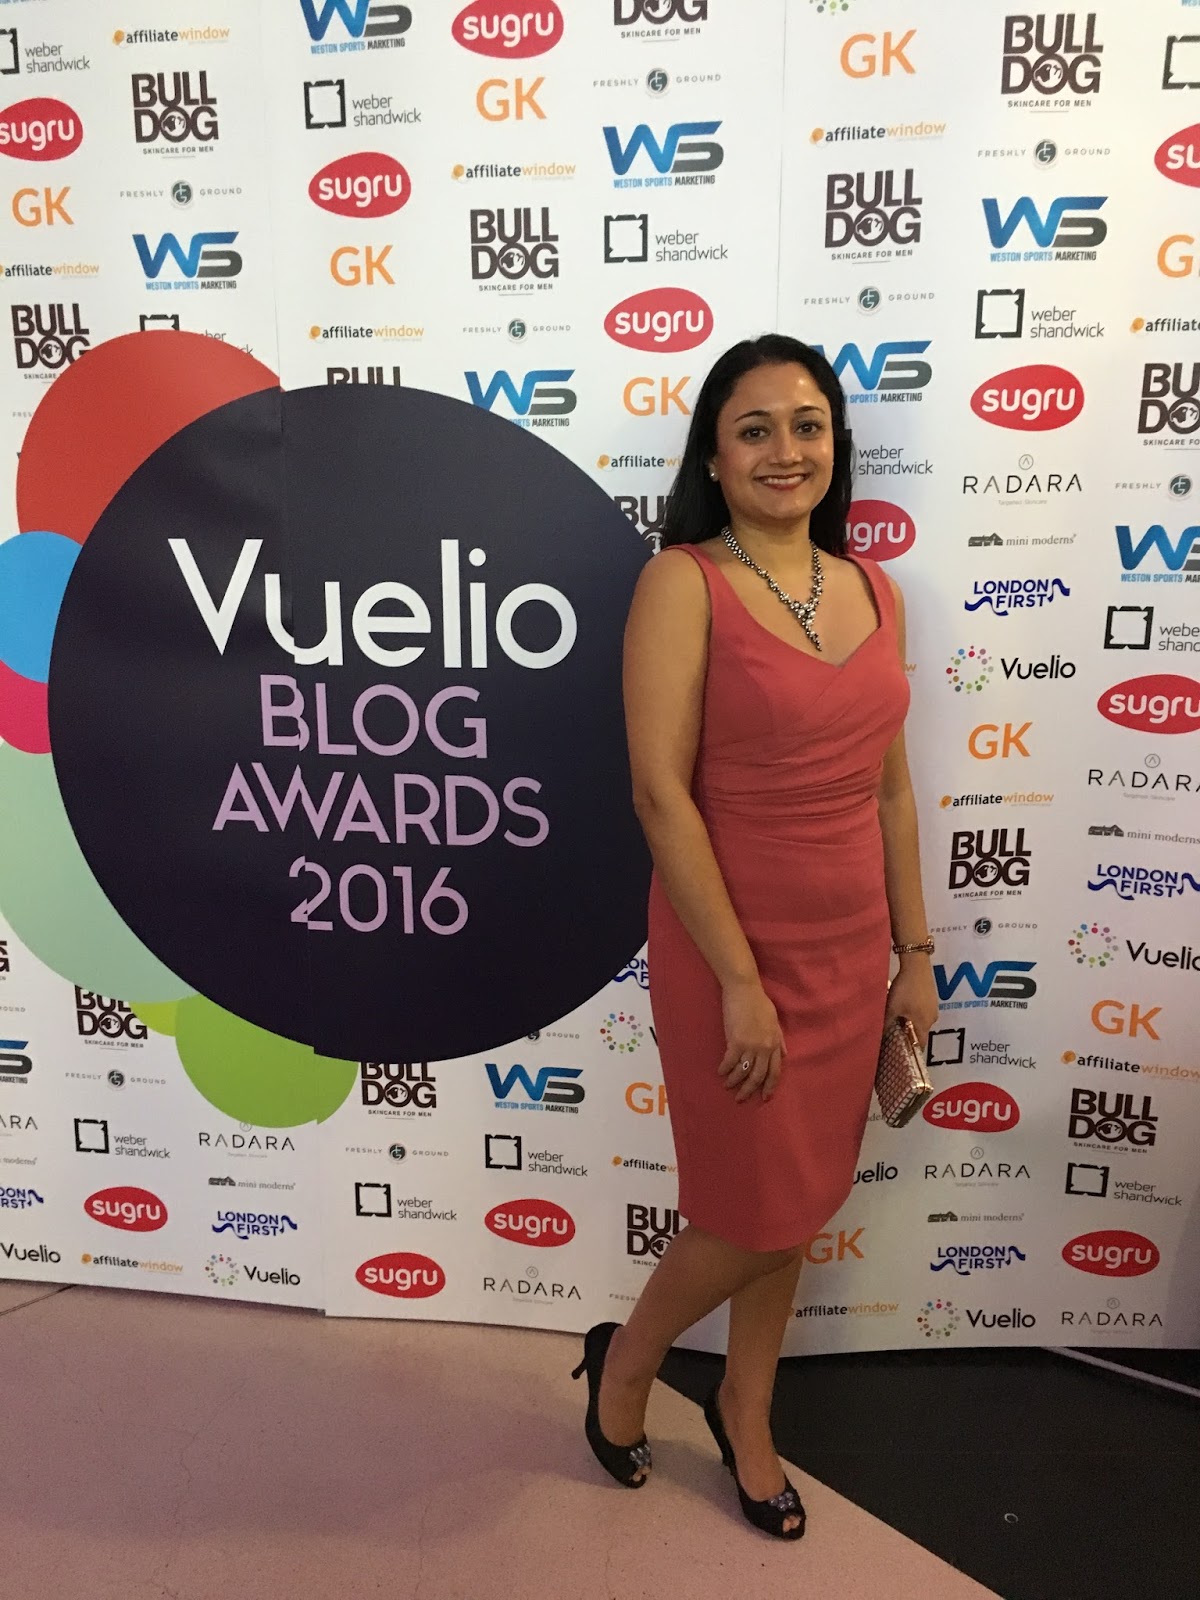 Vuelio blog awards 2016